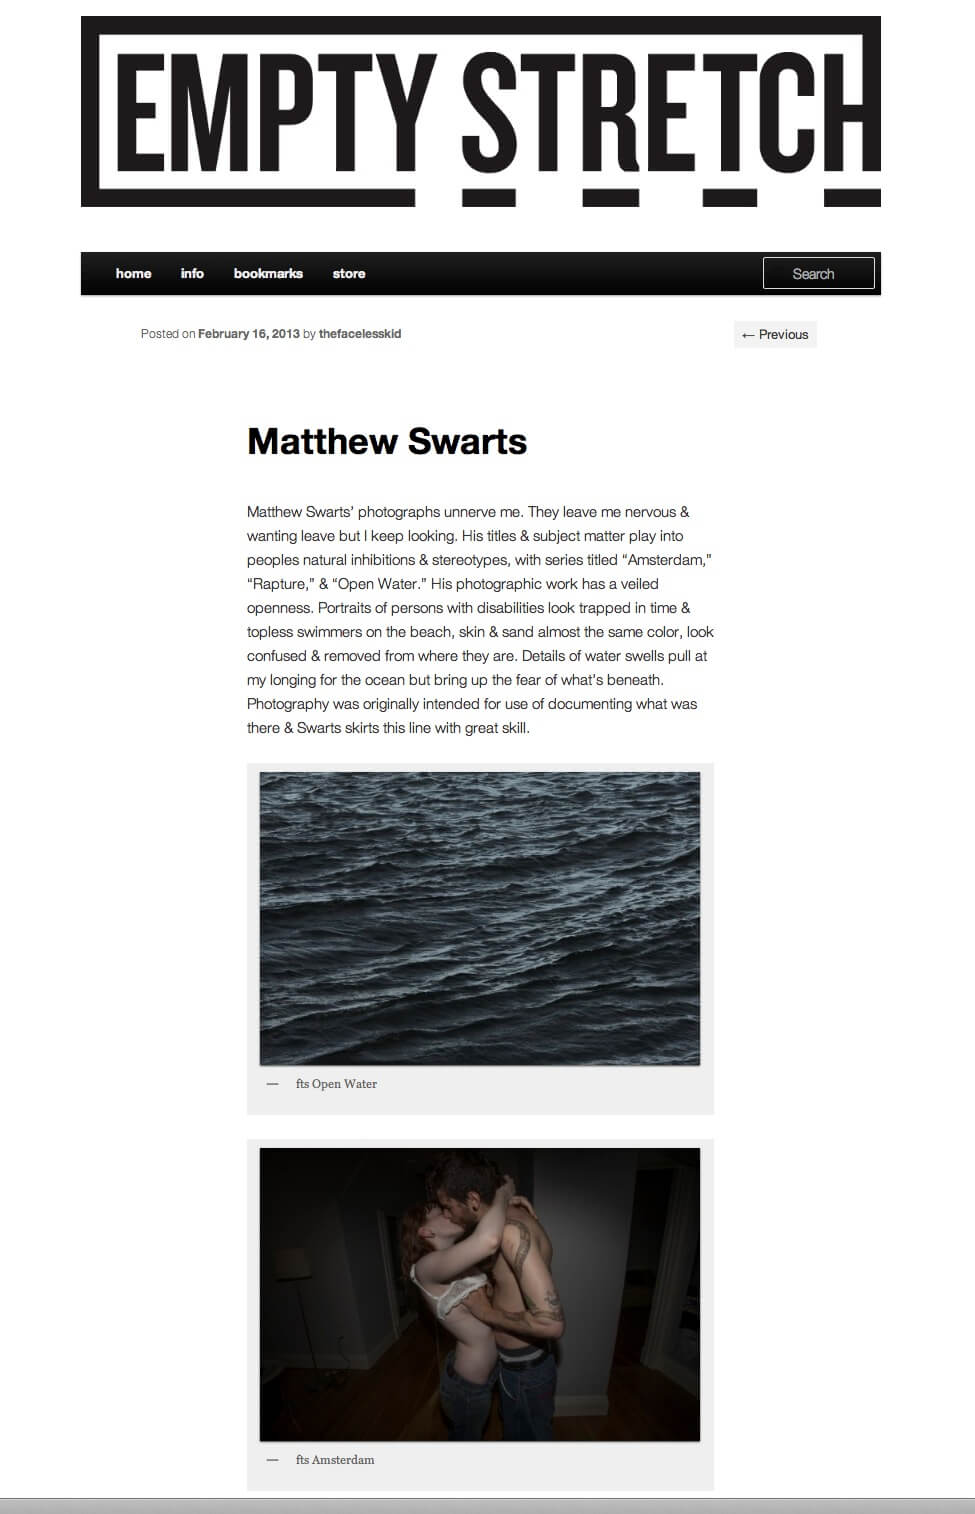 Matthew Swarts + Empty Stretch